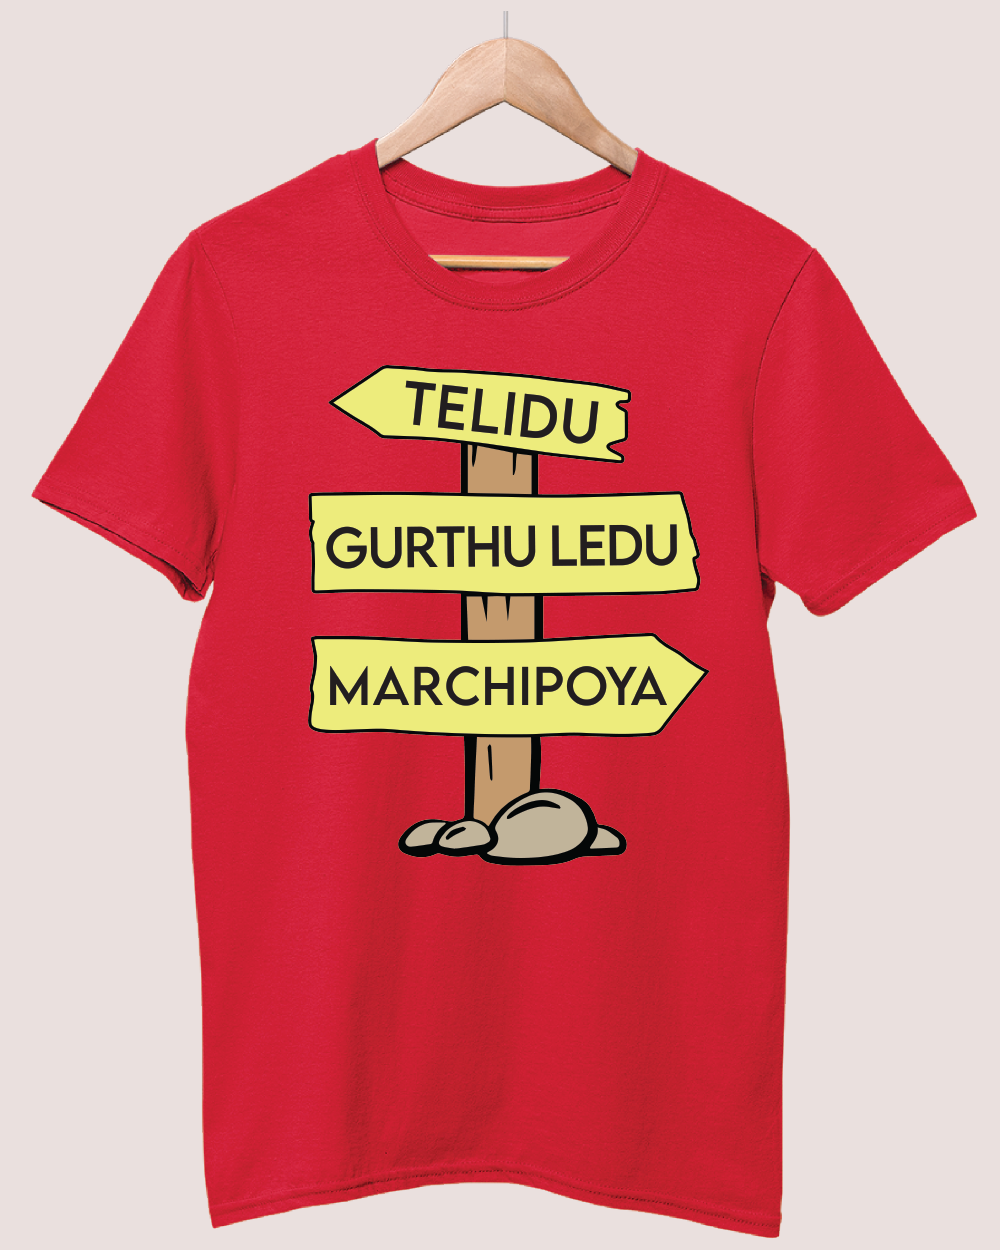 Telidu gurthuledu marchipoya T-shirt